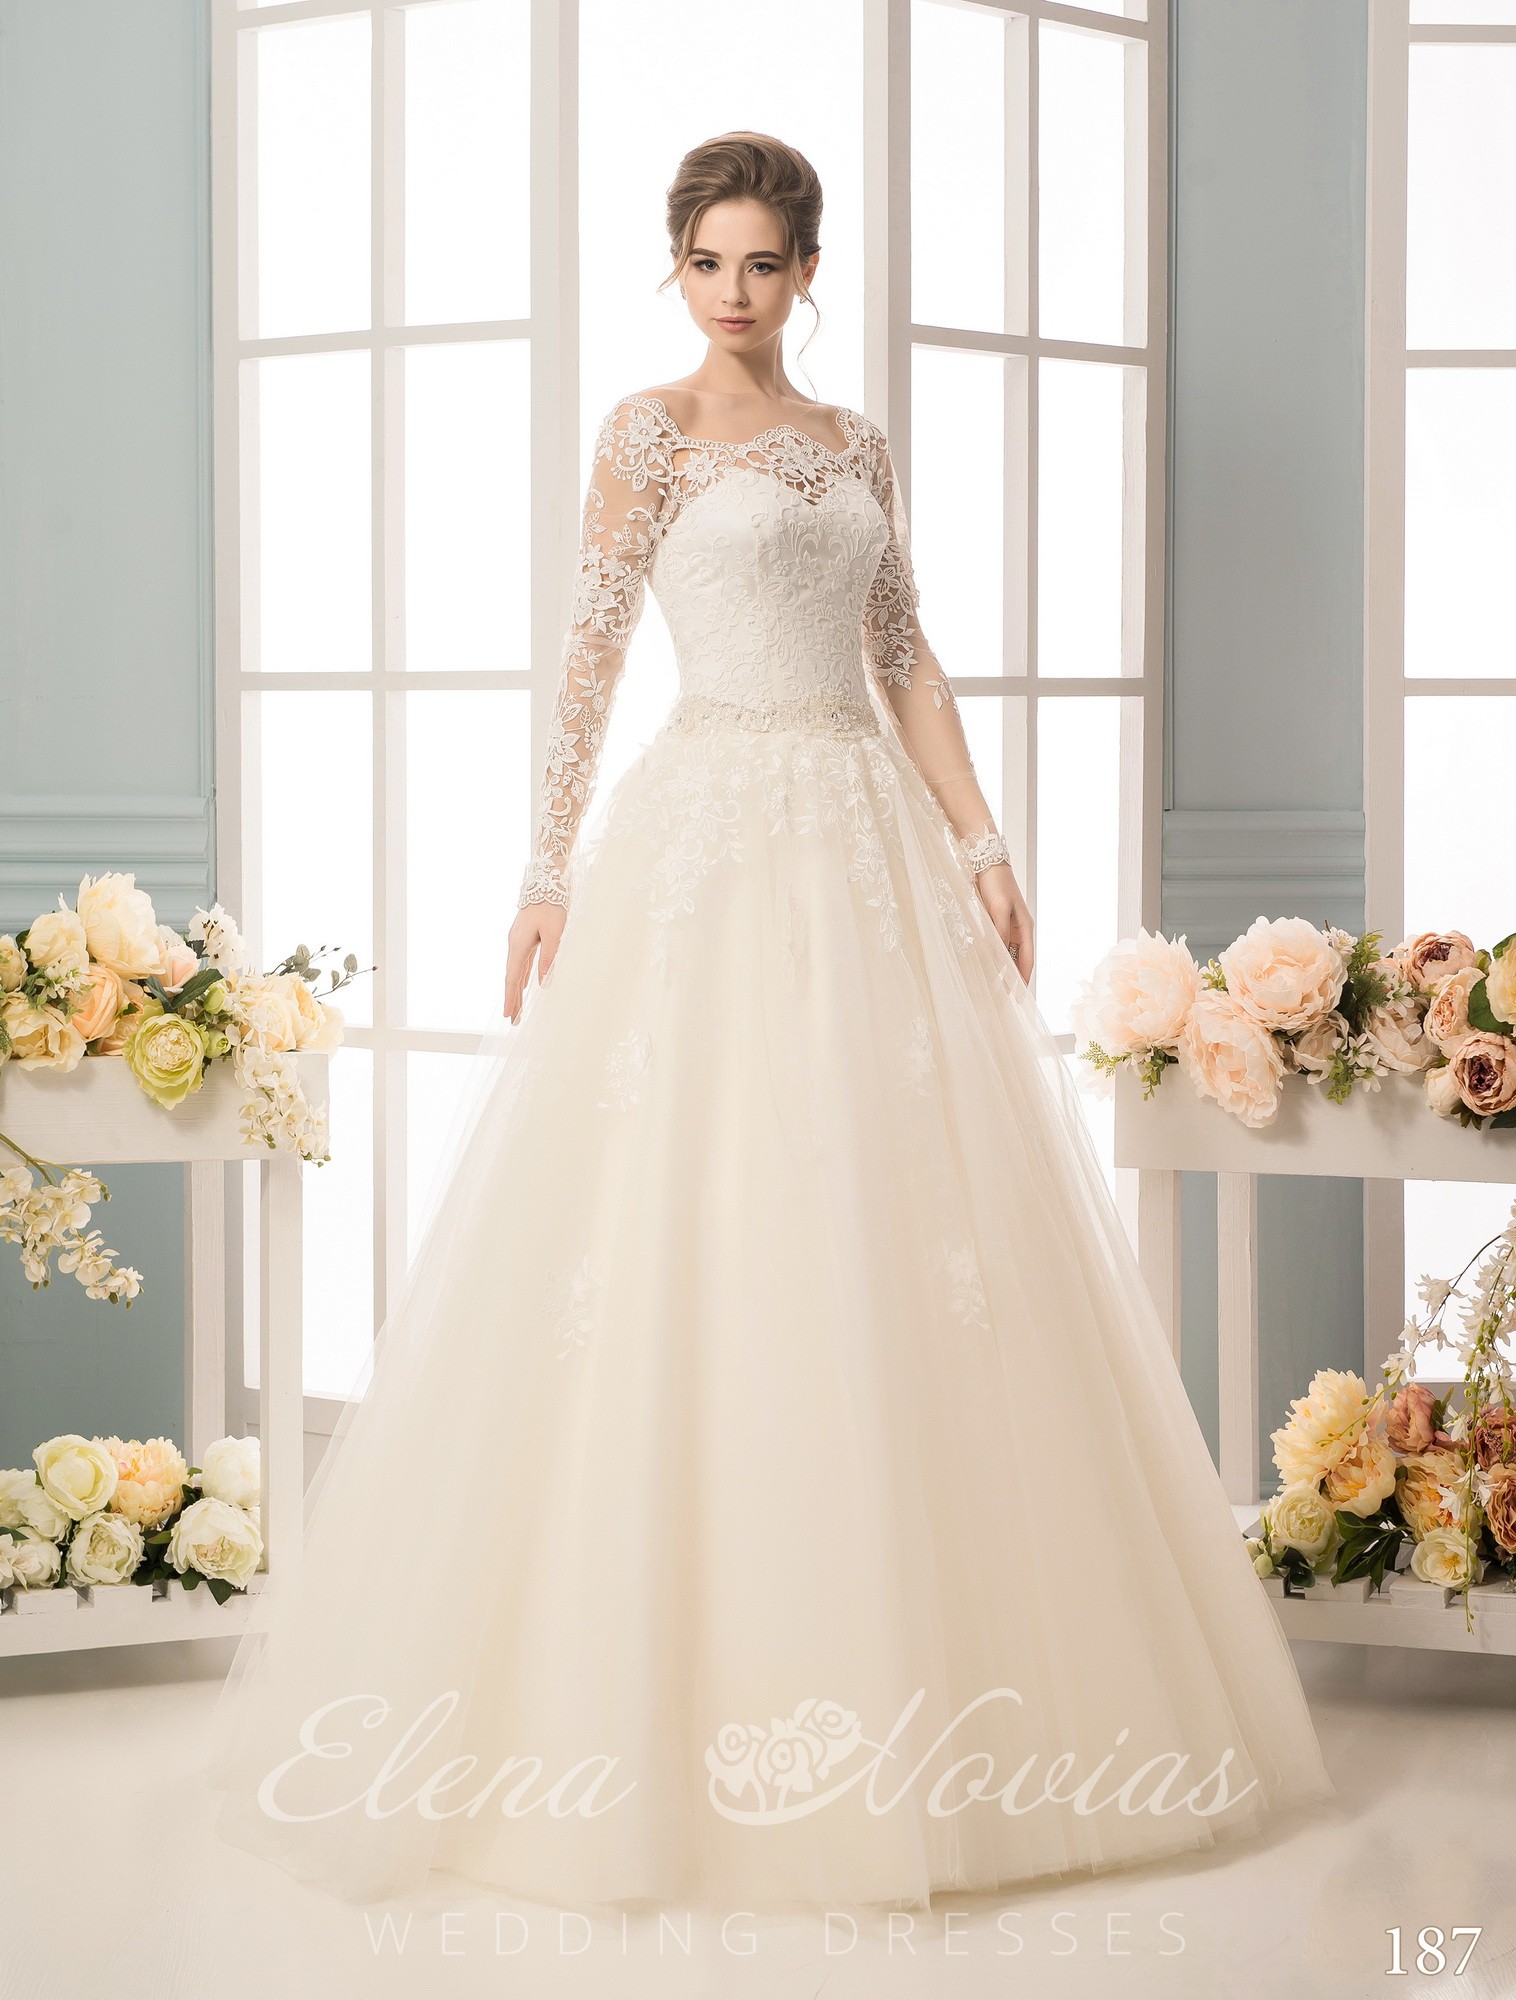 Wedding dress wholesale 187